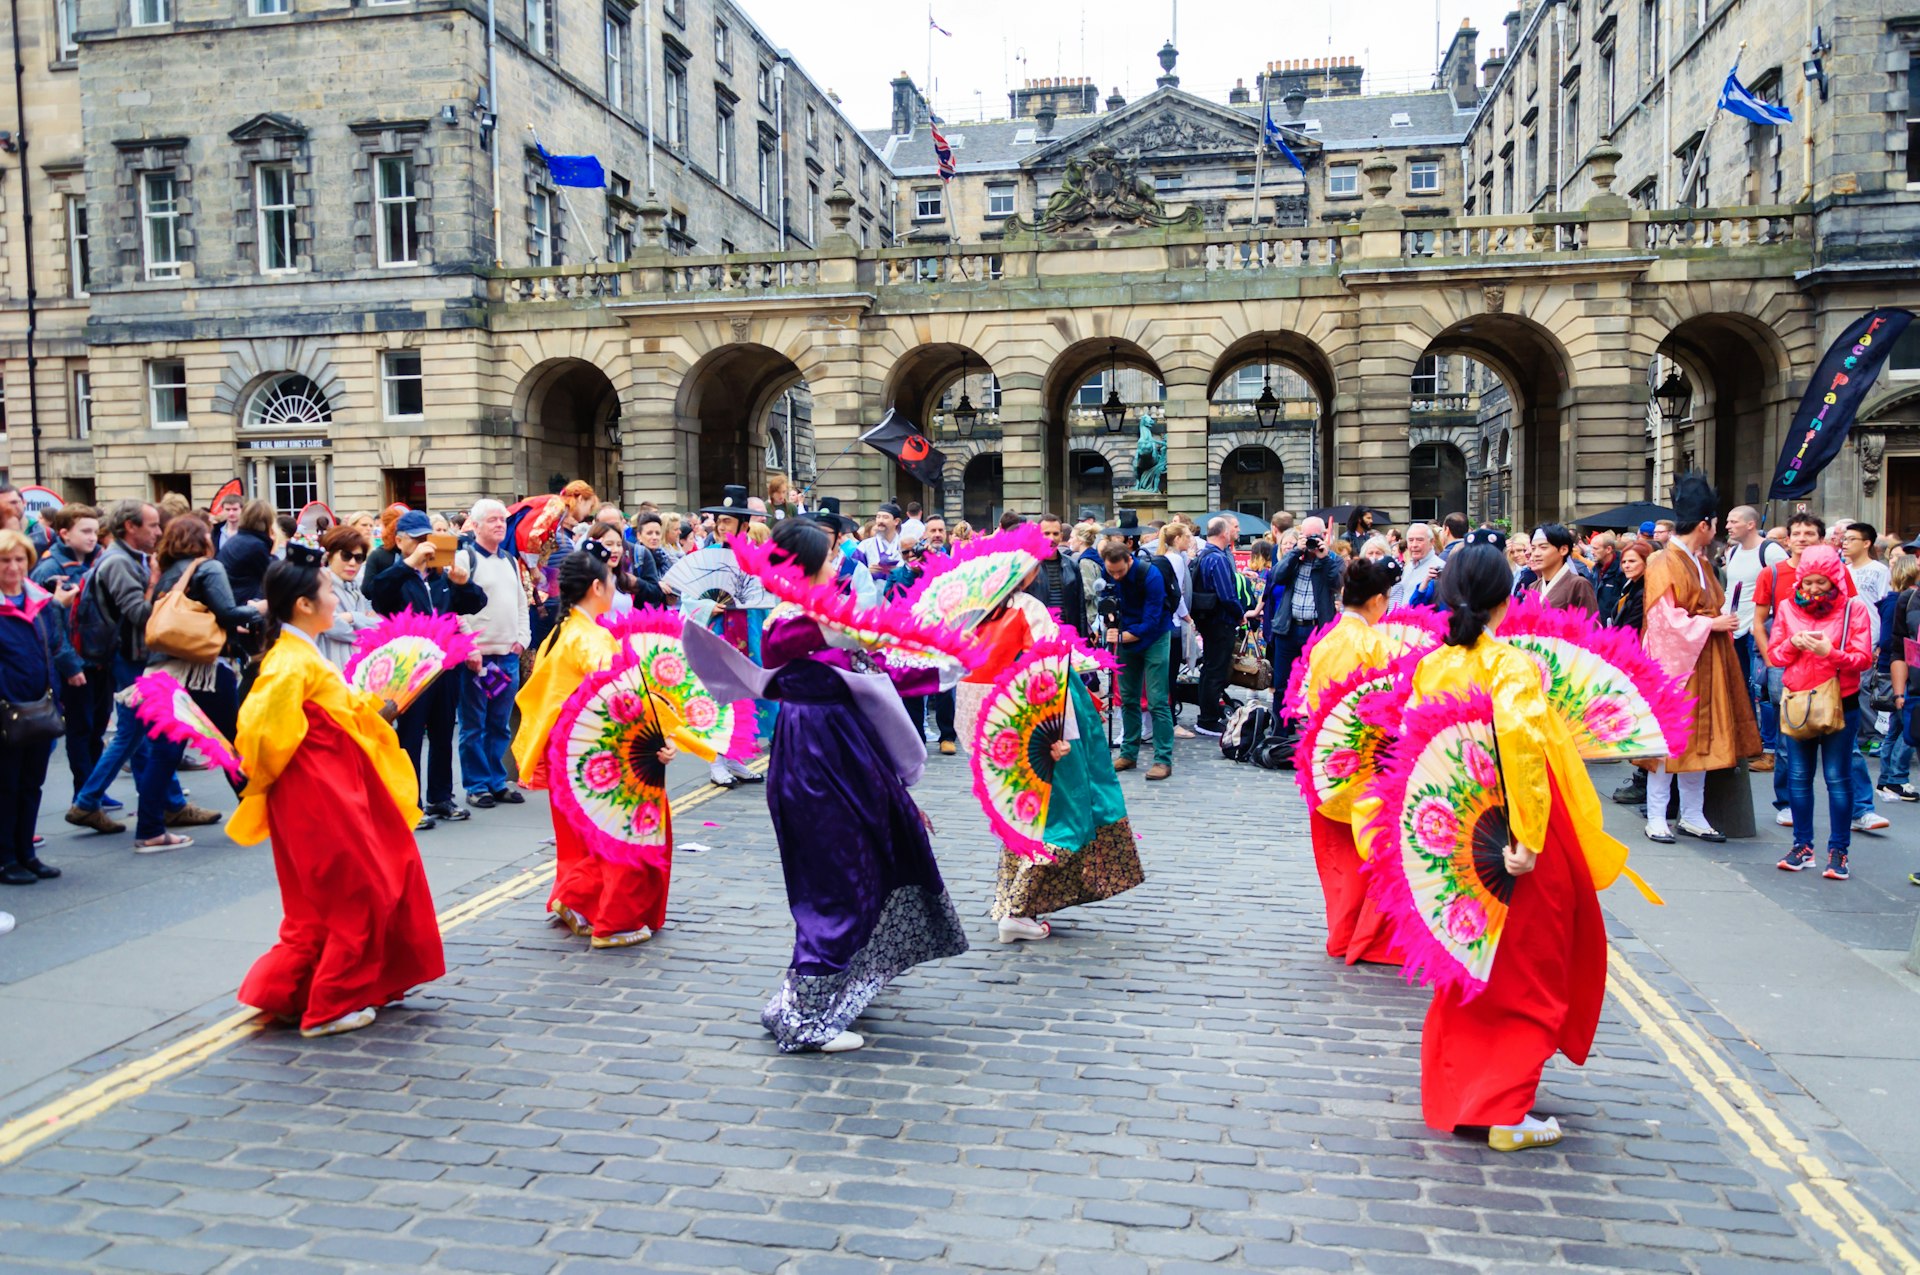 Female performers on the high street during the Edinburgh Fringe Festival in Scotland